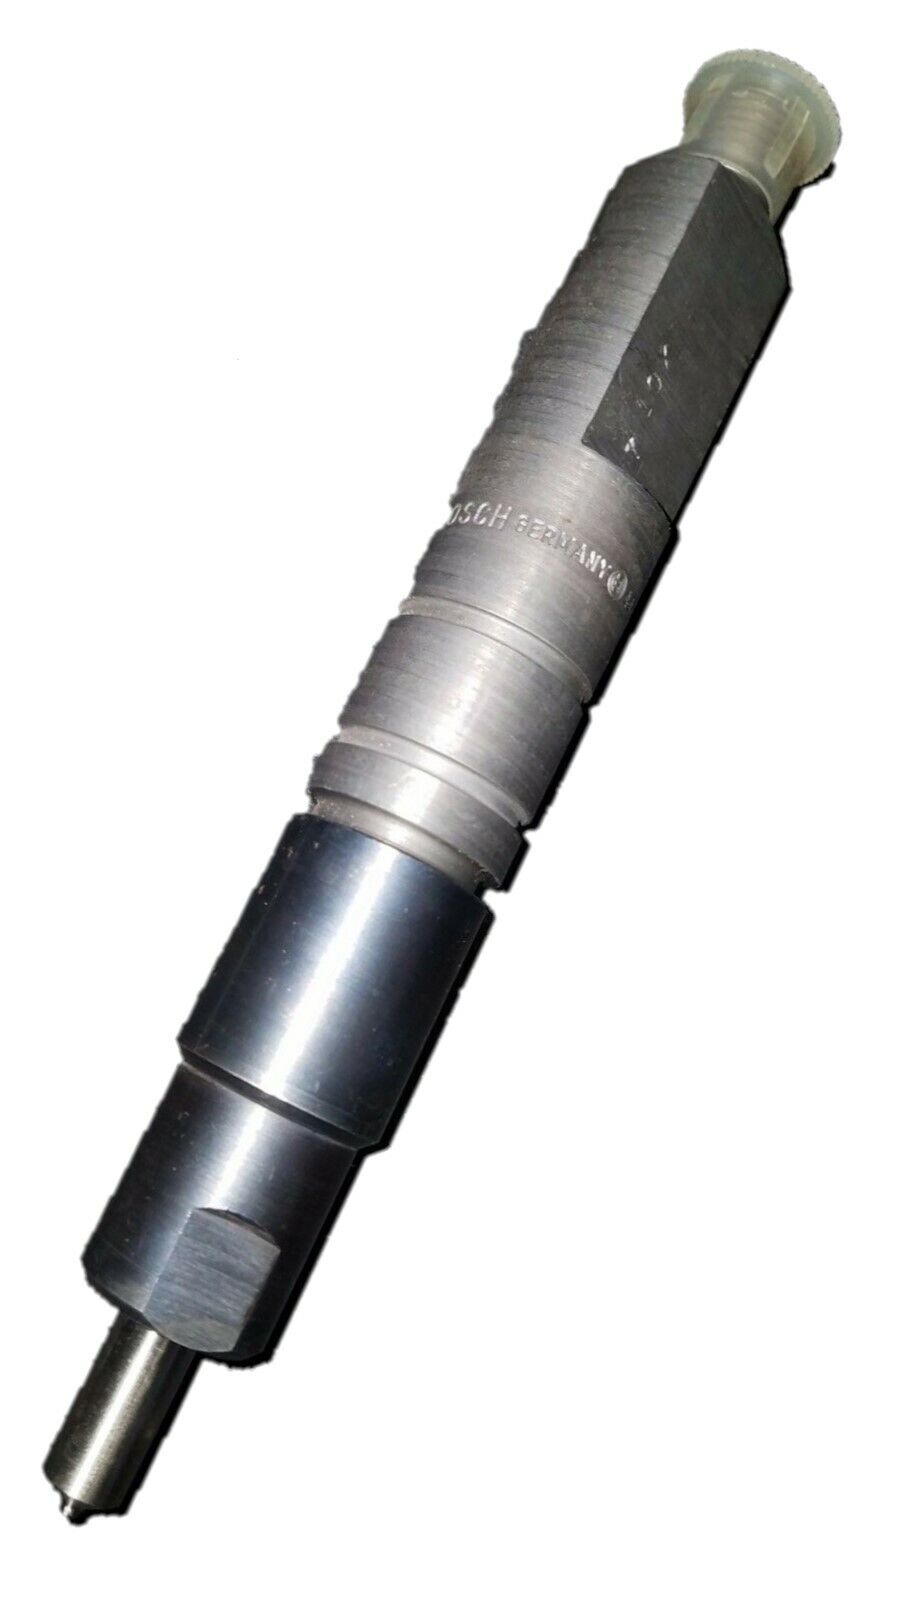 Original Bosch Fuel Injector for Renault MIDS 06.20.30 Engine 0432291710 835